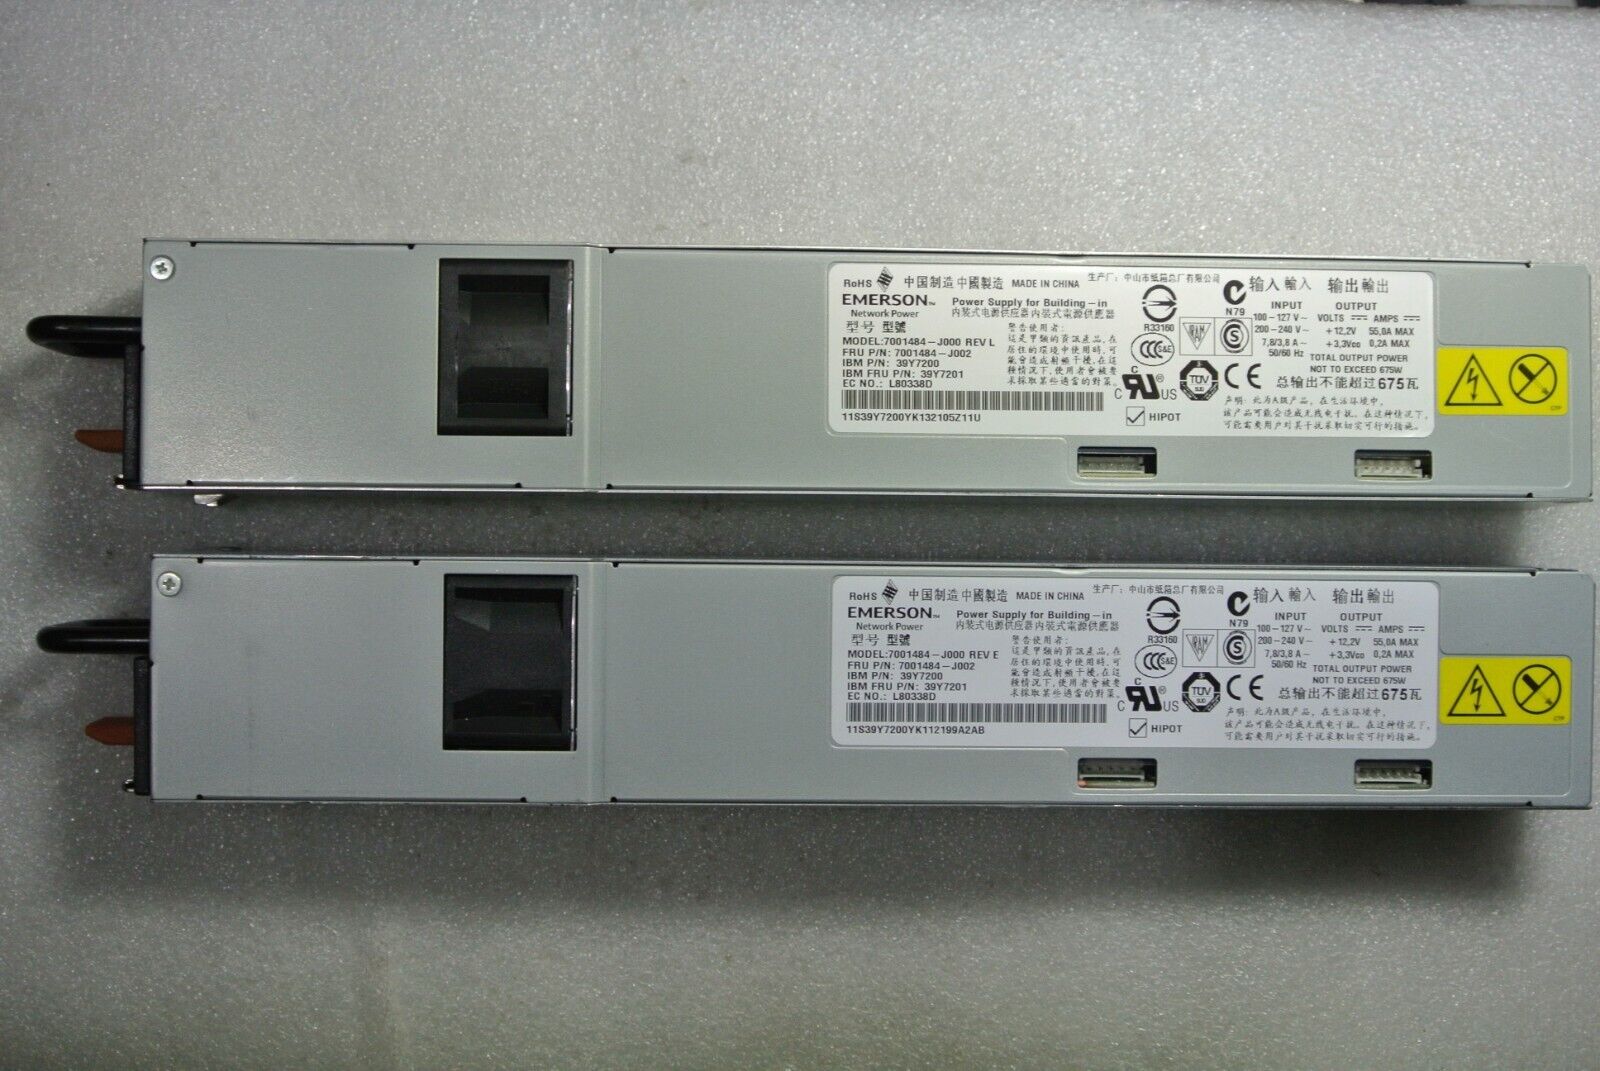 Lot of 2 IBM Emerson 39Y7200 Power Supply for X3650 X3550 M2 Servers